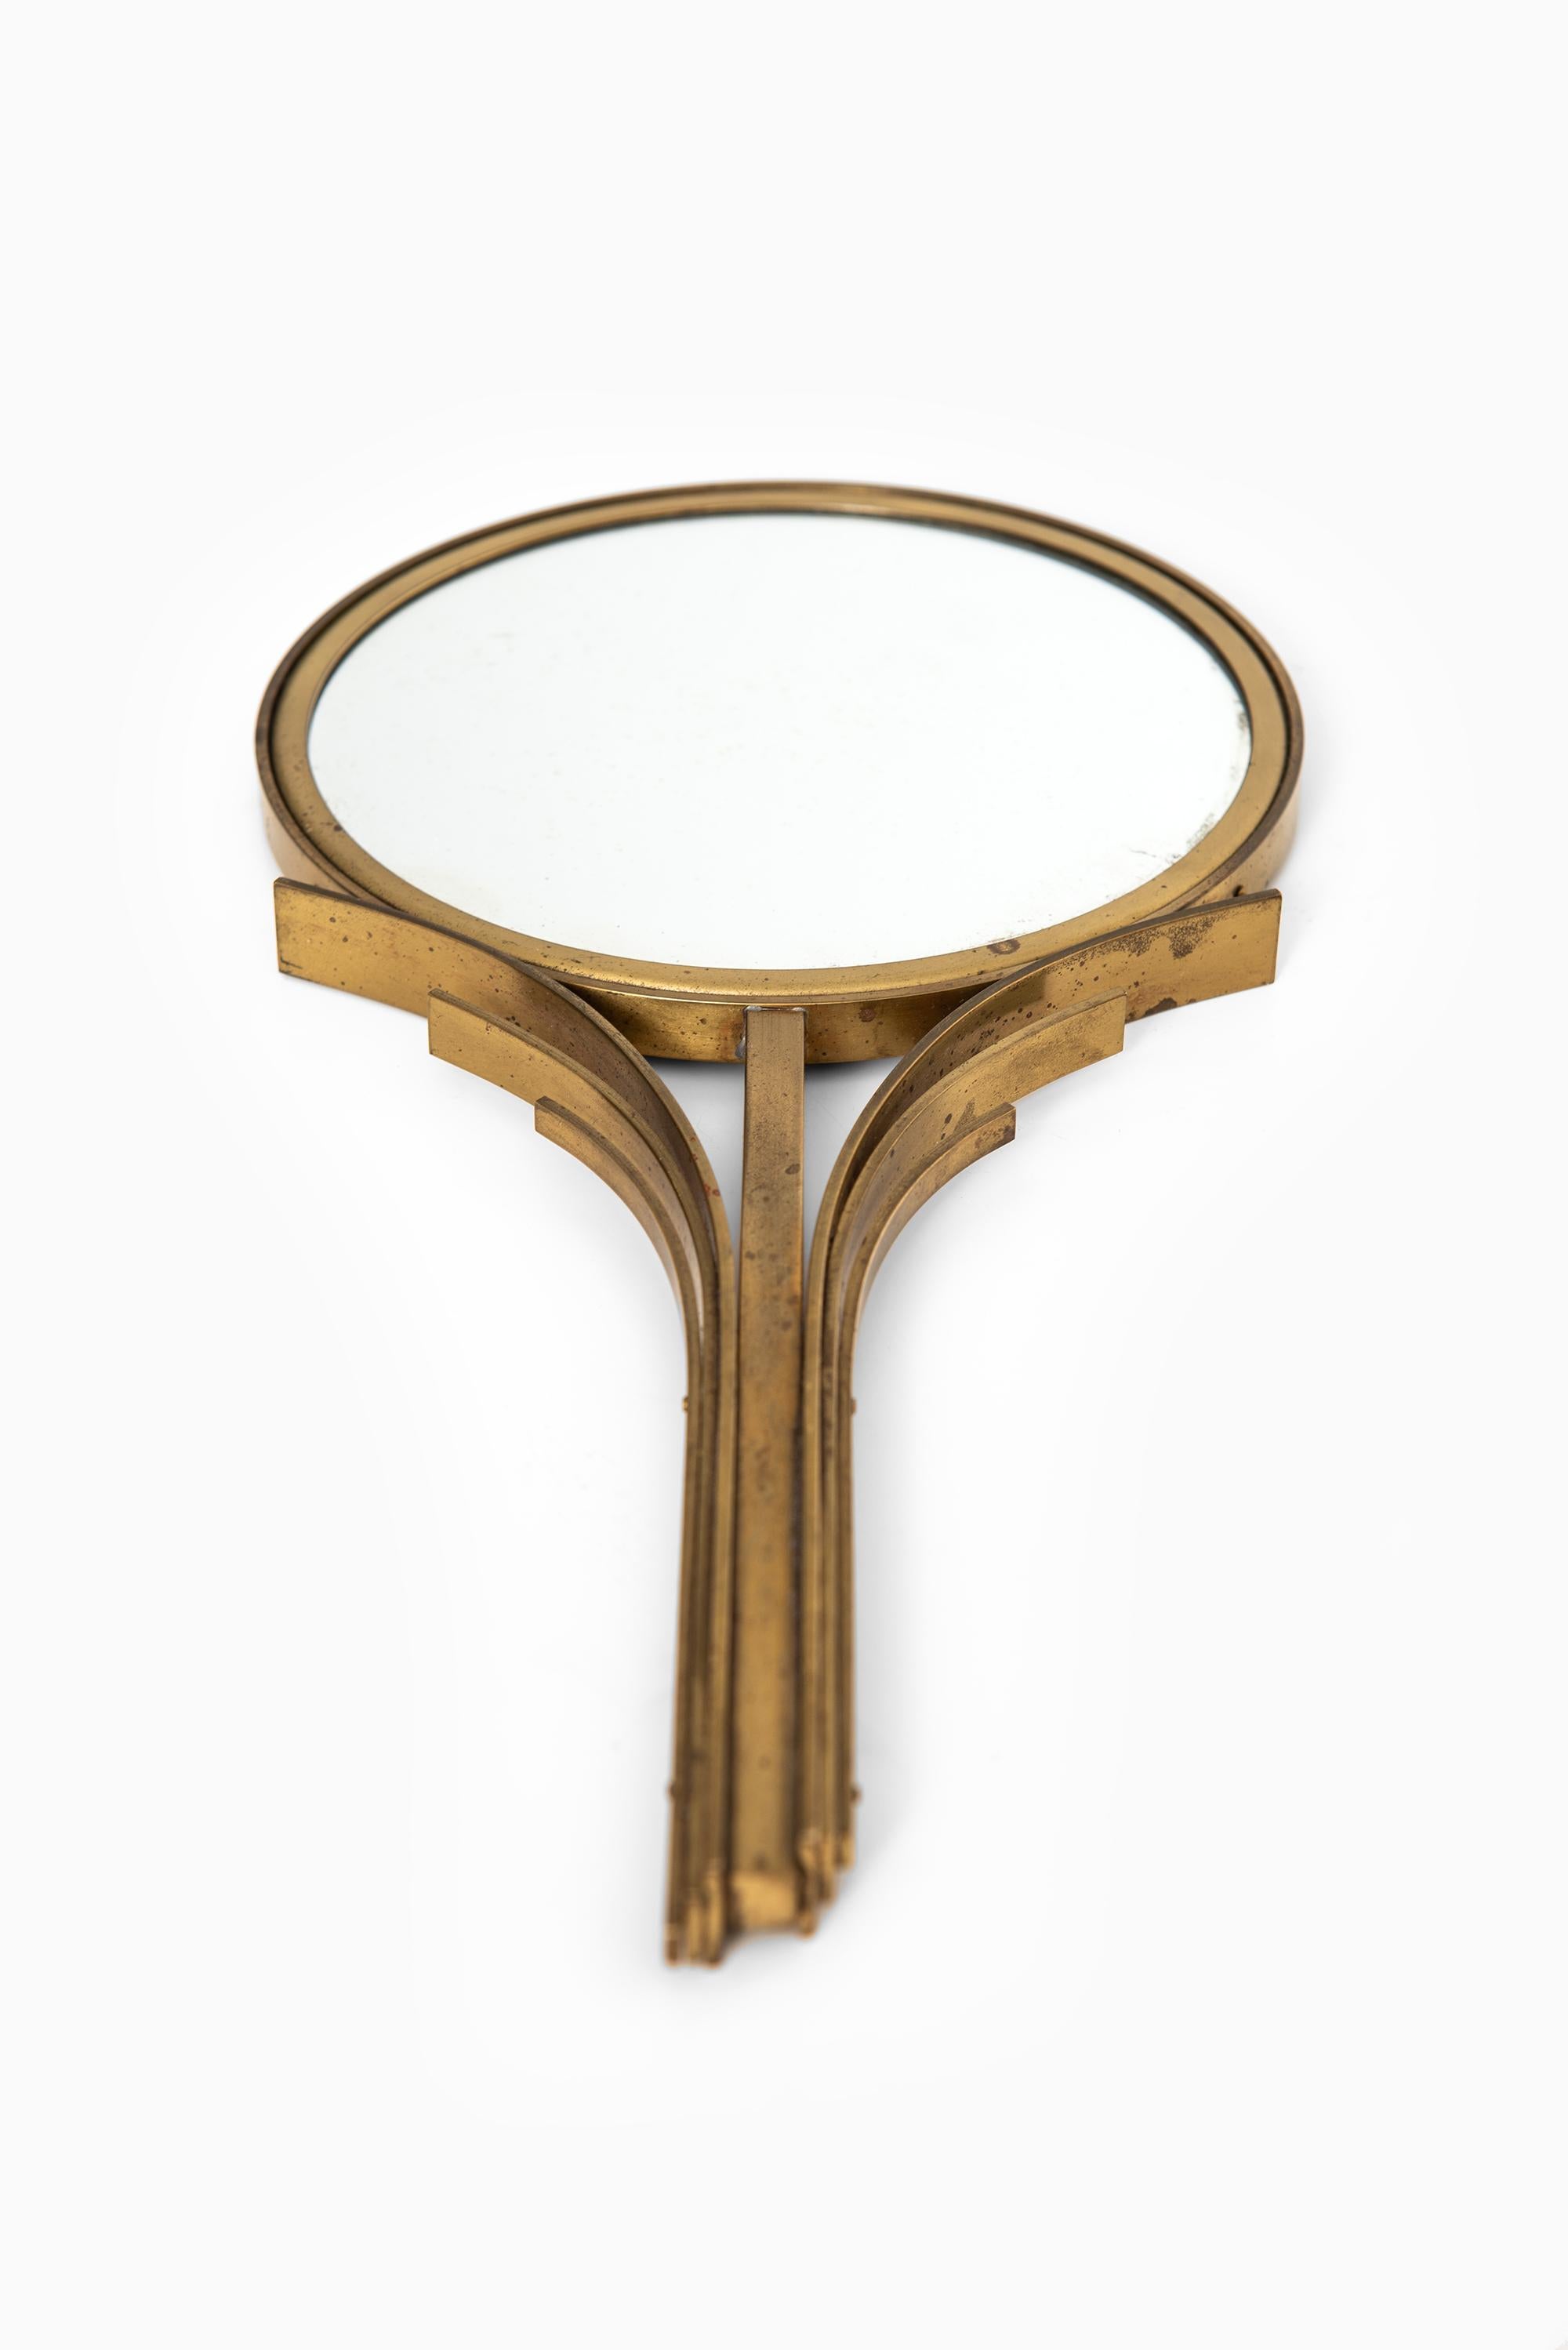 Rare Art Deco Mirror designed by Ivar Ålenius Björk. Produced by Ystad metall in Sweden.